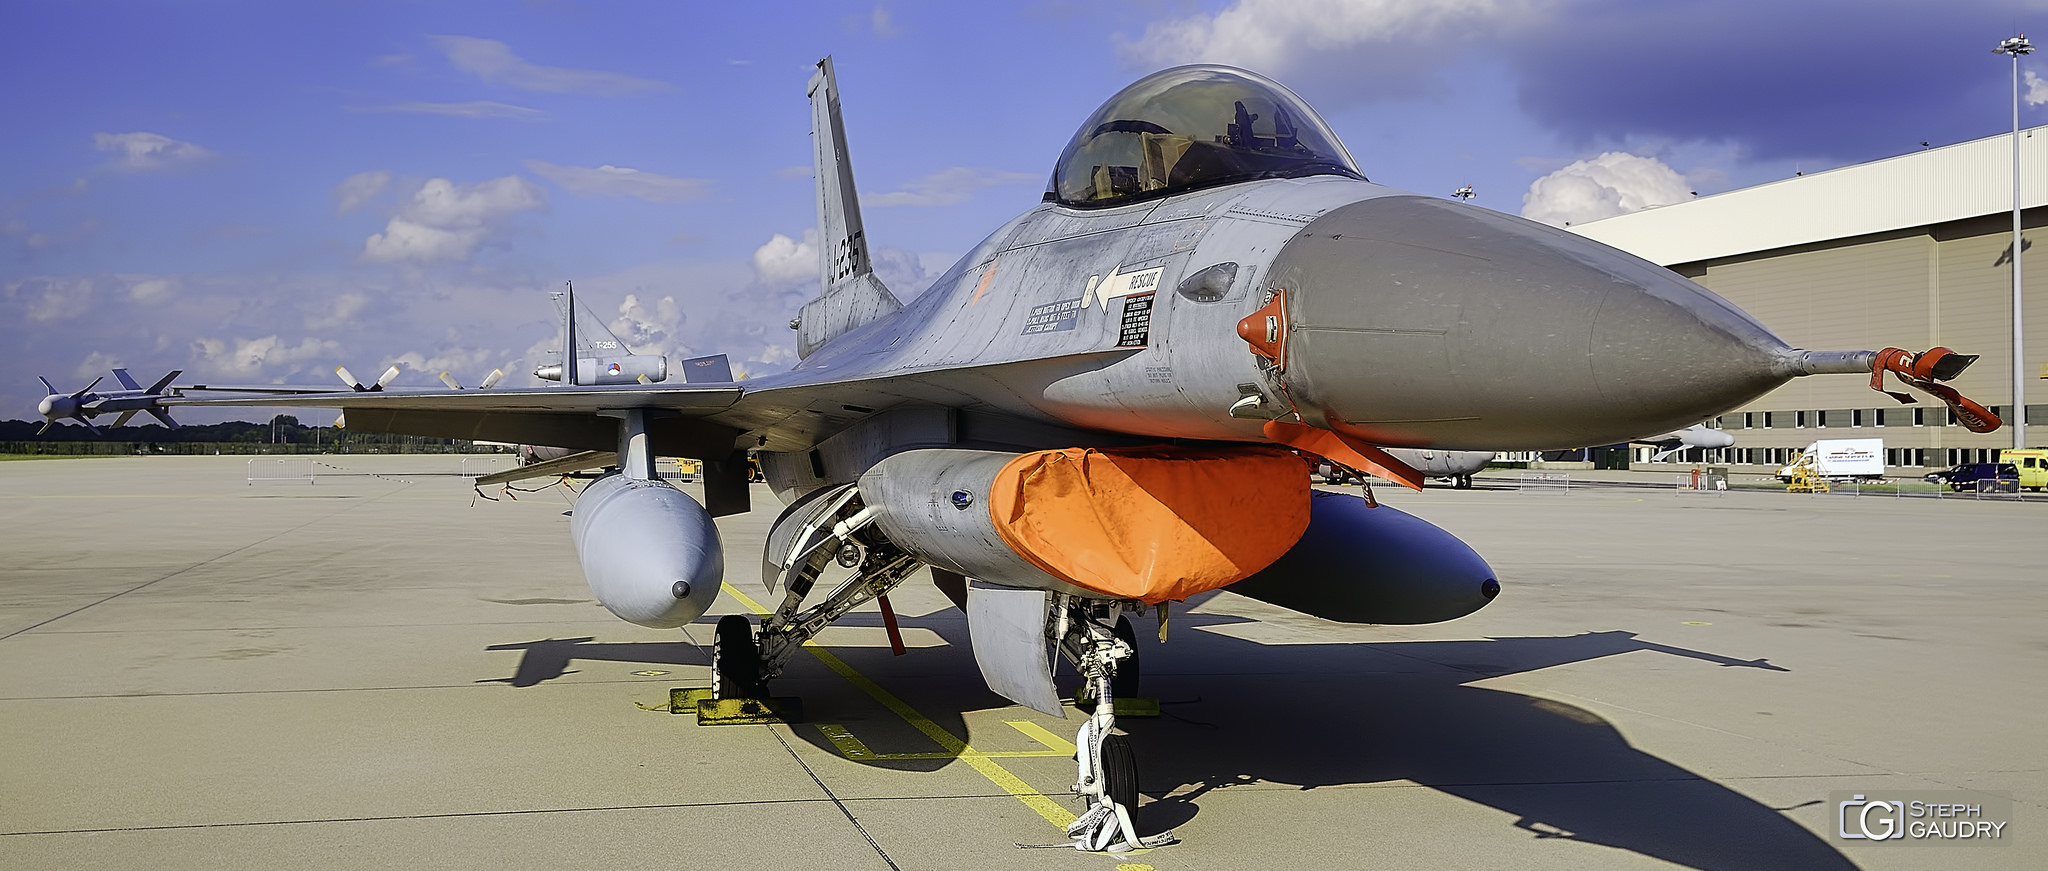 EHEH - F-16 Fighting Falcon [Click to start slideshow]